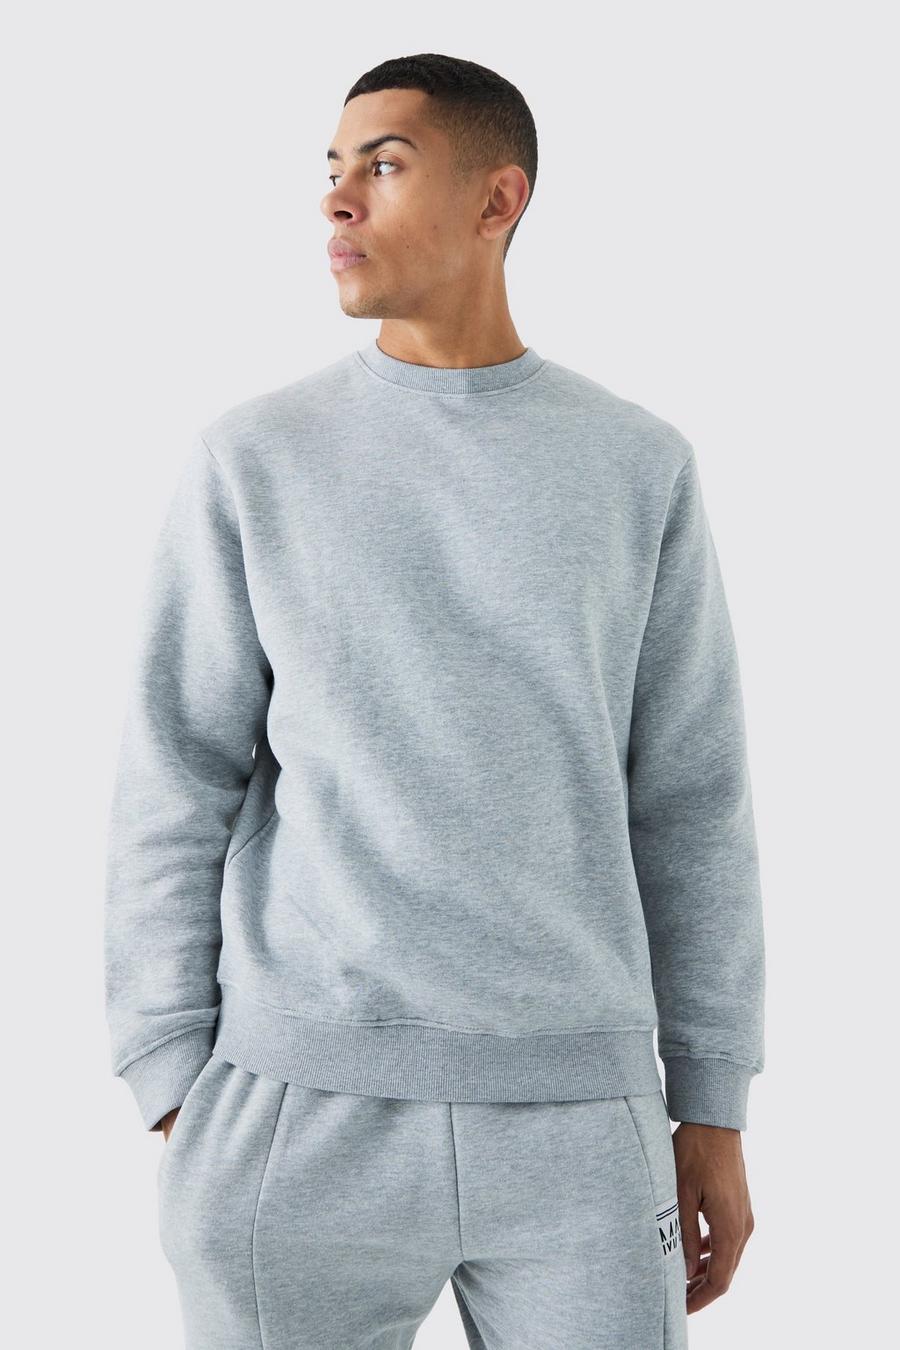 Grey marl Basic Crew Neck Sweatshirt